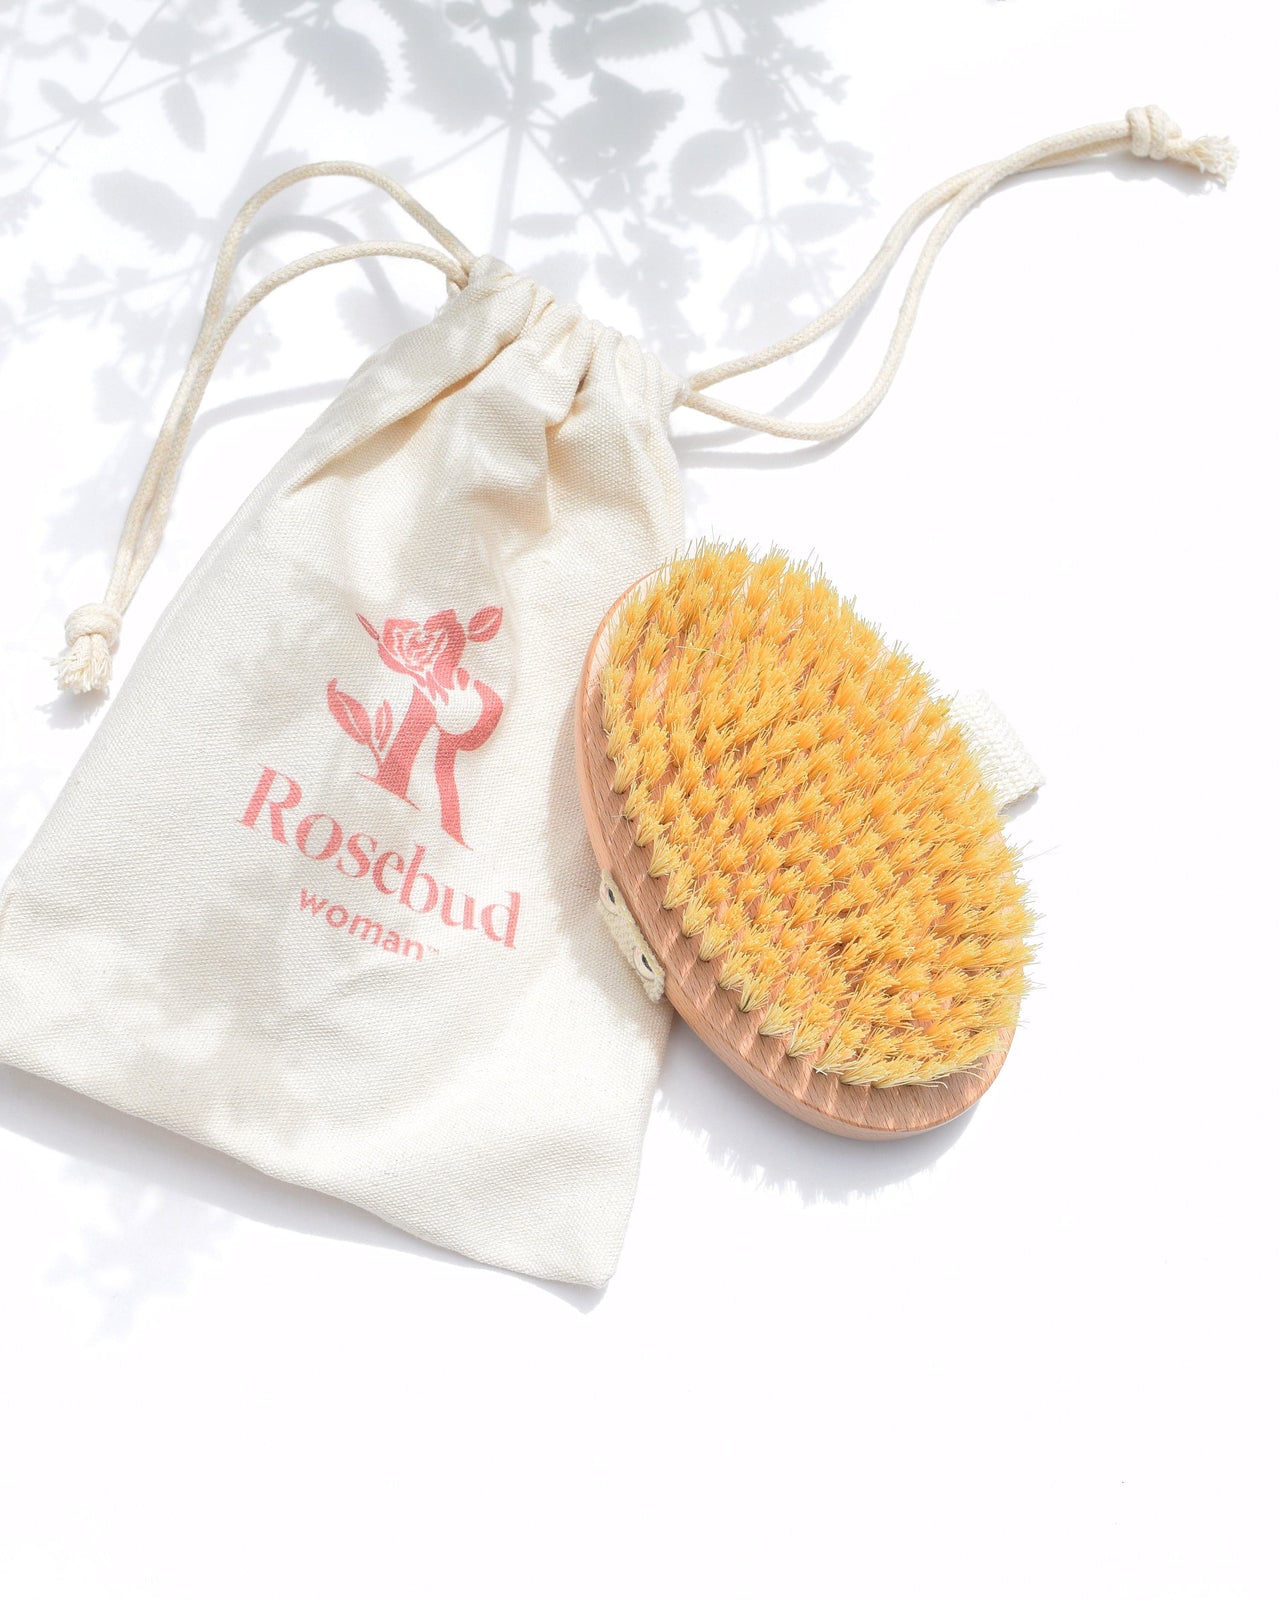 Rosebud Woman The Perfect Skin Brush Product Image #1